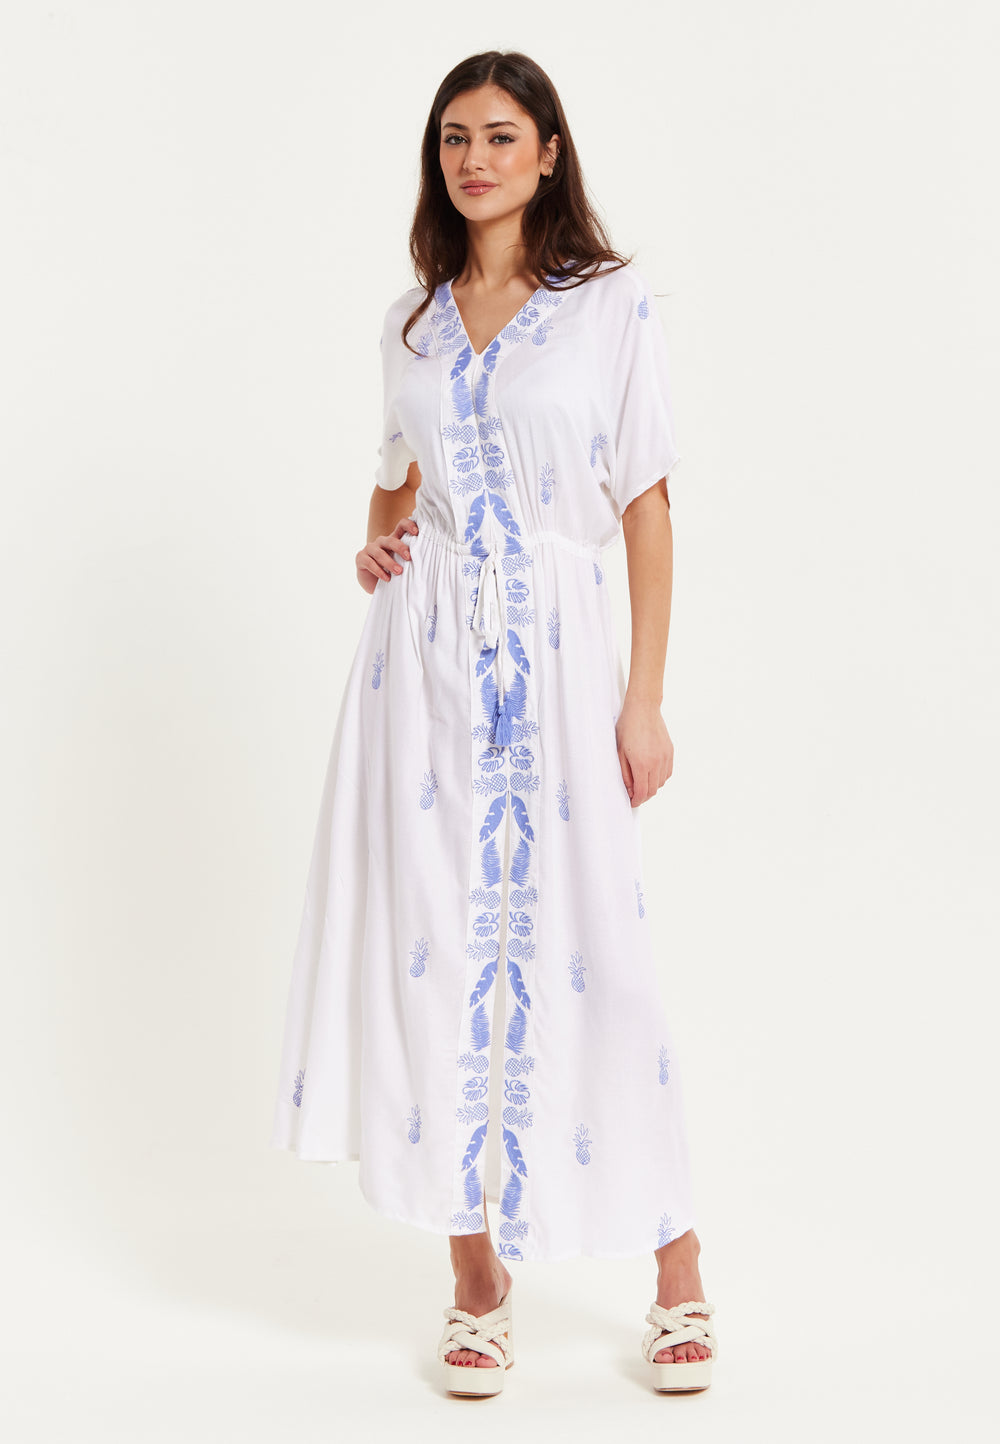 Liquorish White Maxi Dress with Blue Pineapple Embroidery